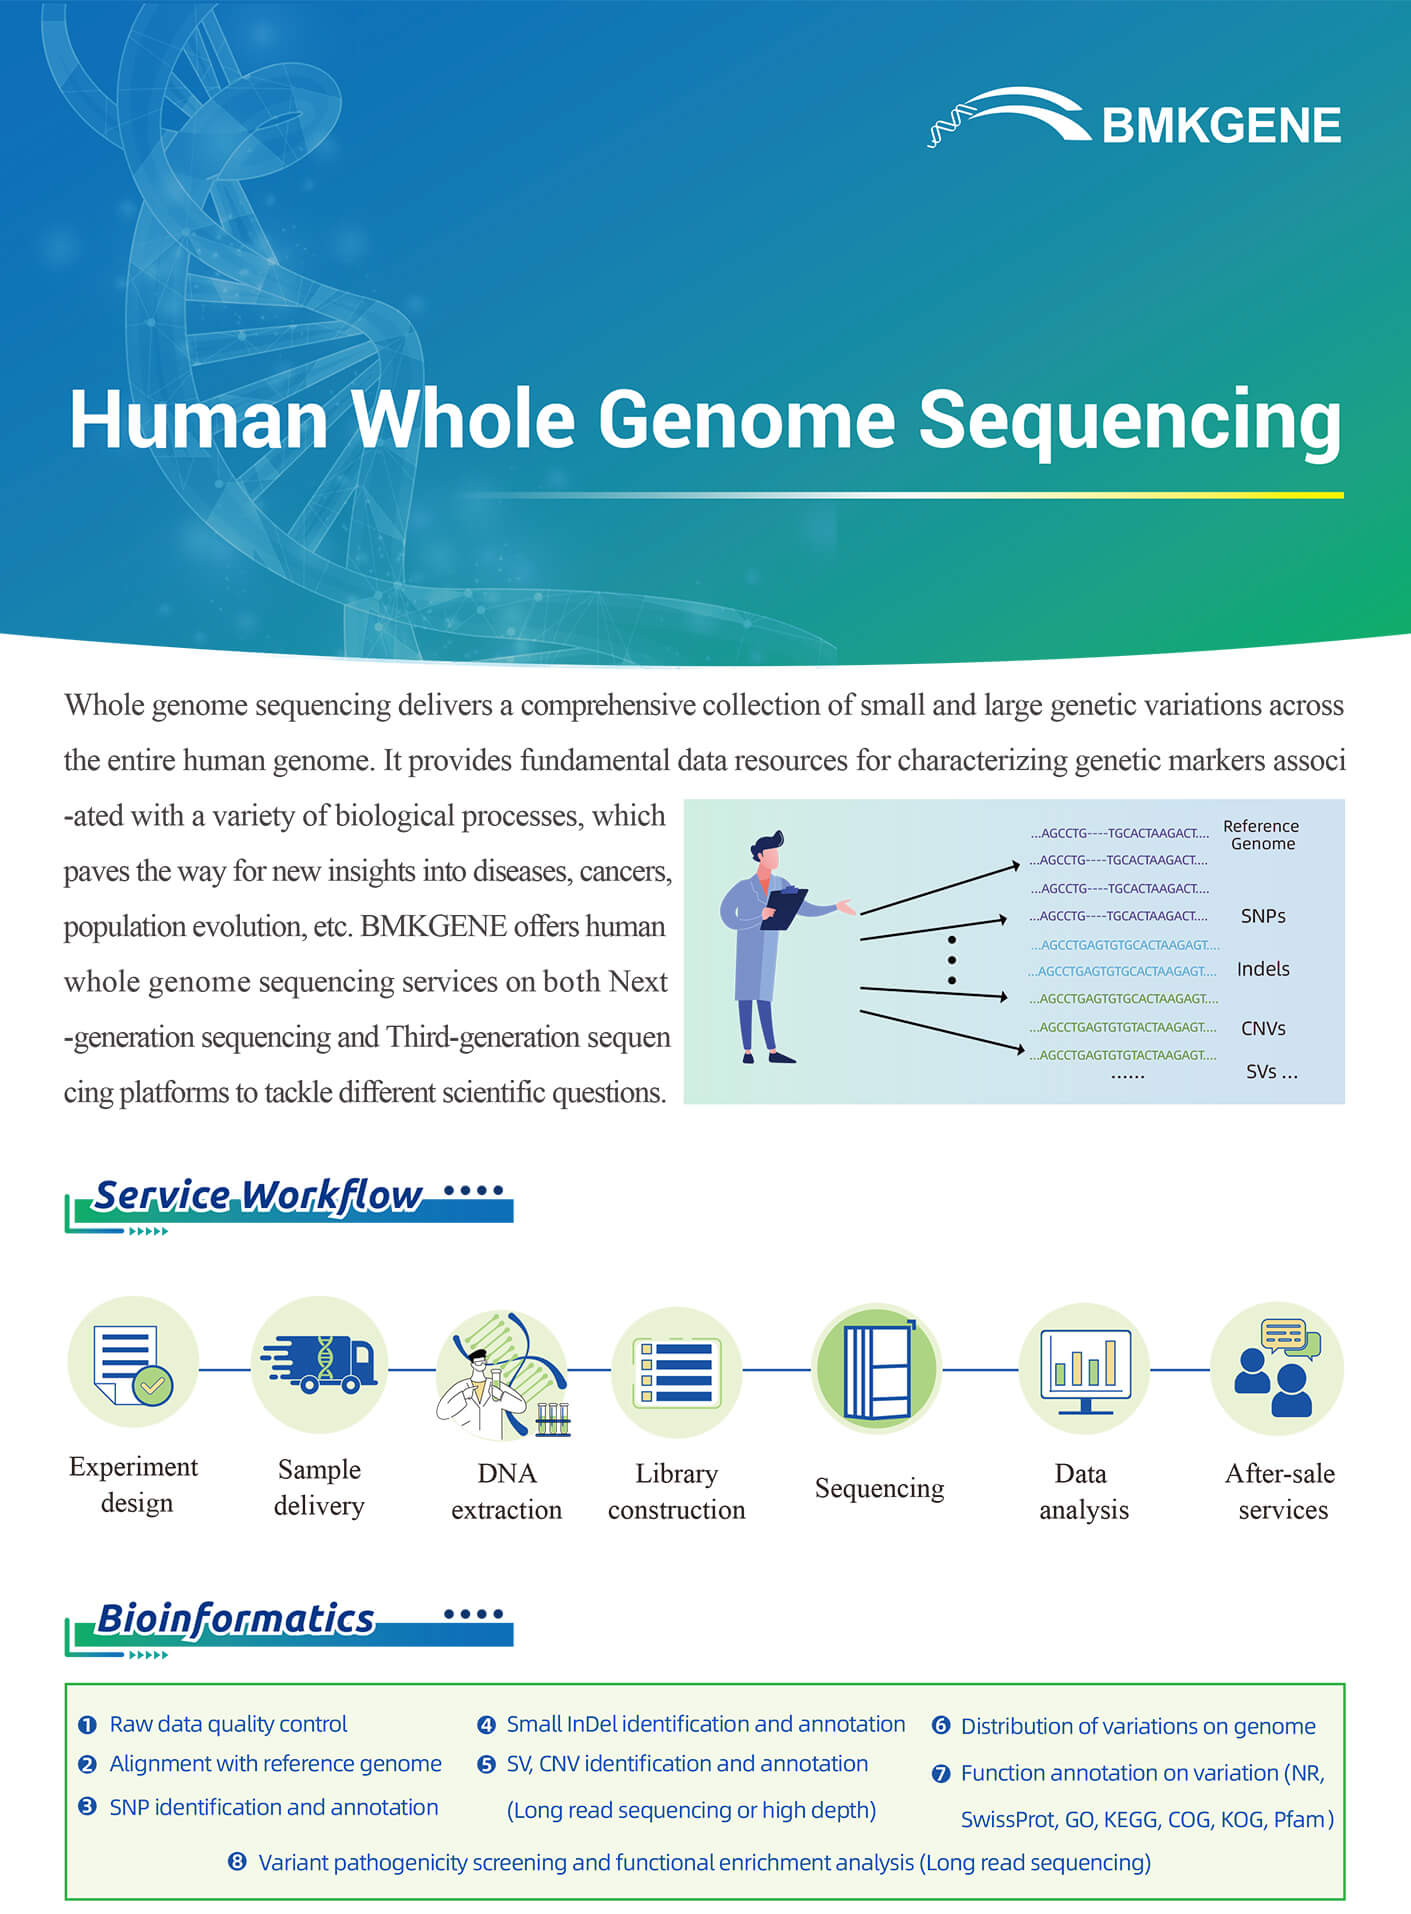 https://www.bmkgene.com/uploads/Human-Whole-Genome-Sequencing-hWGS-BMKGENE-2311.pdf